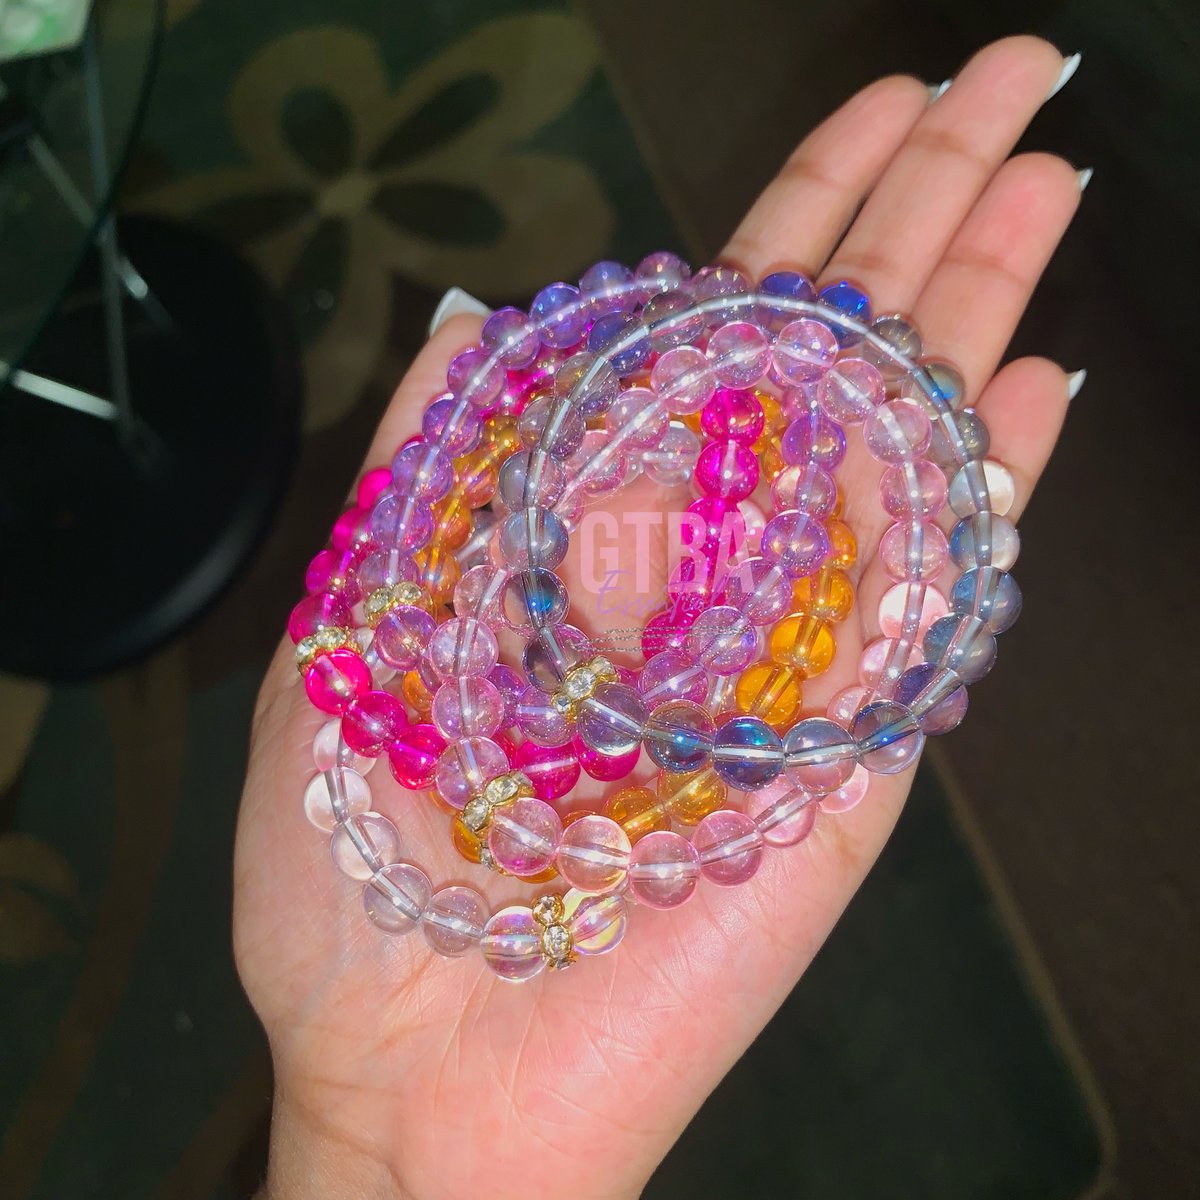 4mm Glass Beads, Round Glass Beads, Jewelry Glass Beads, Bracelet Beads 